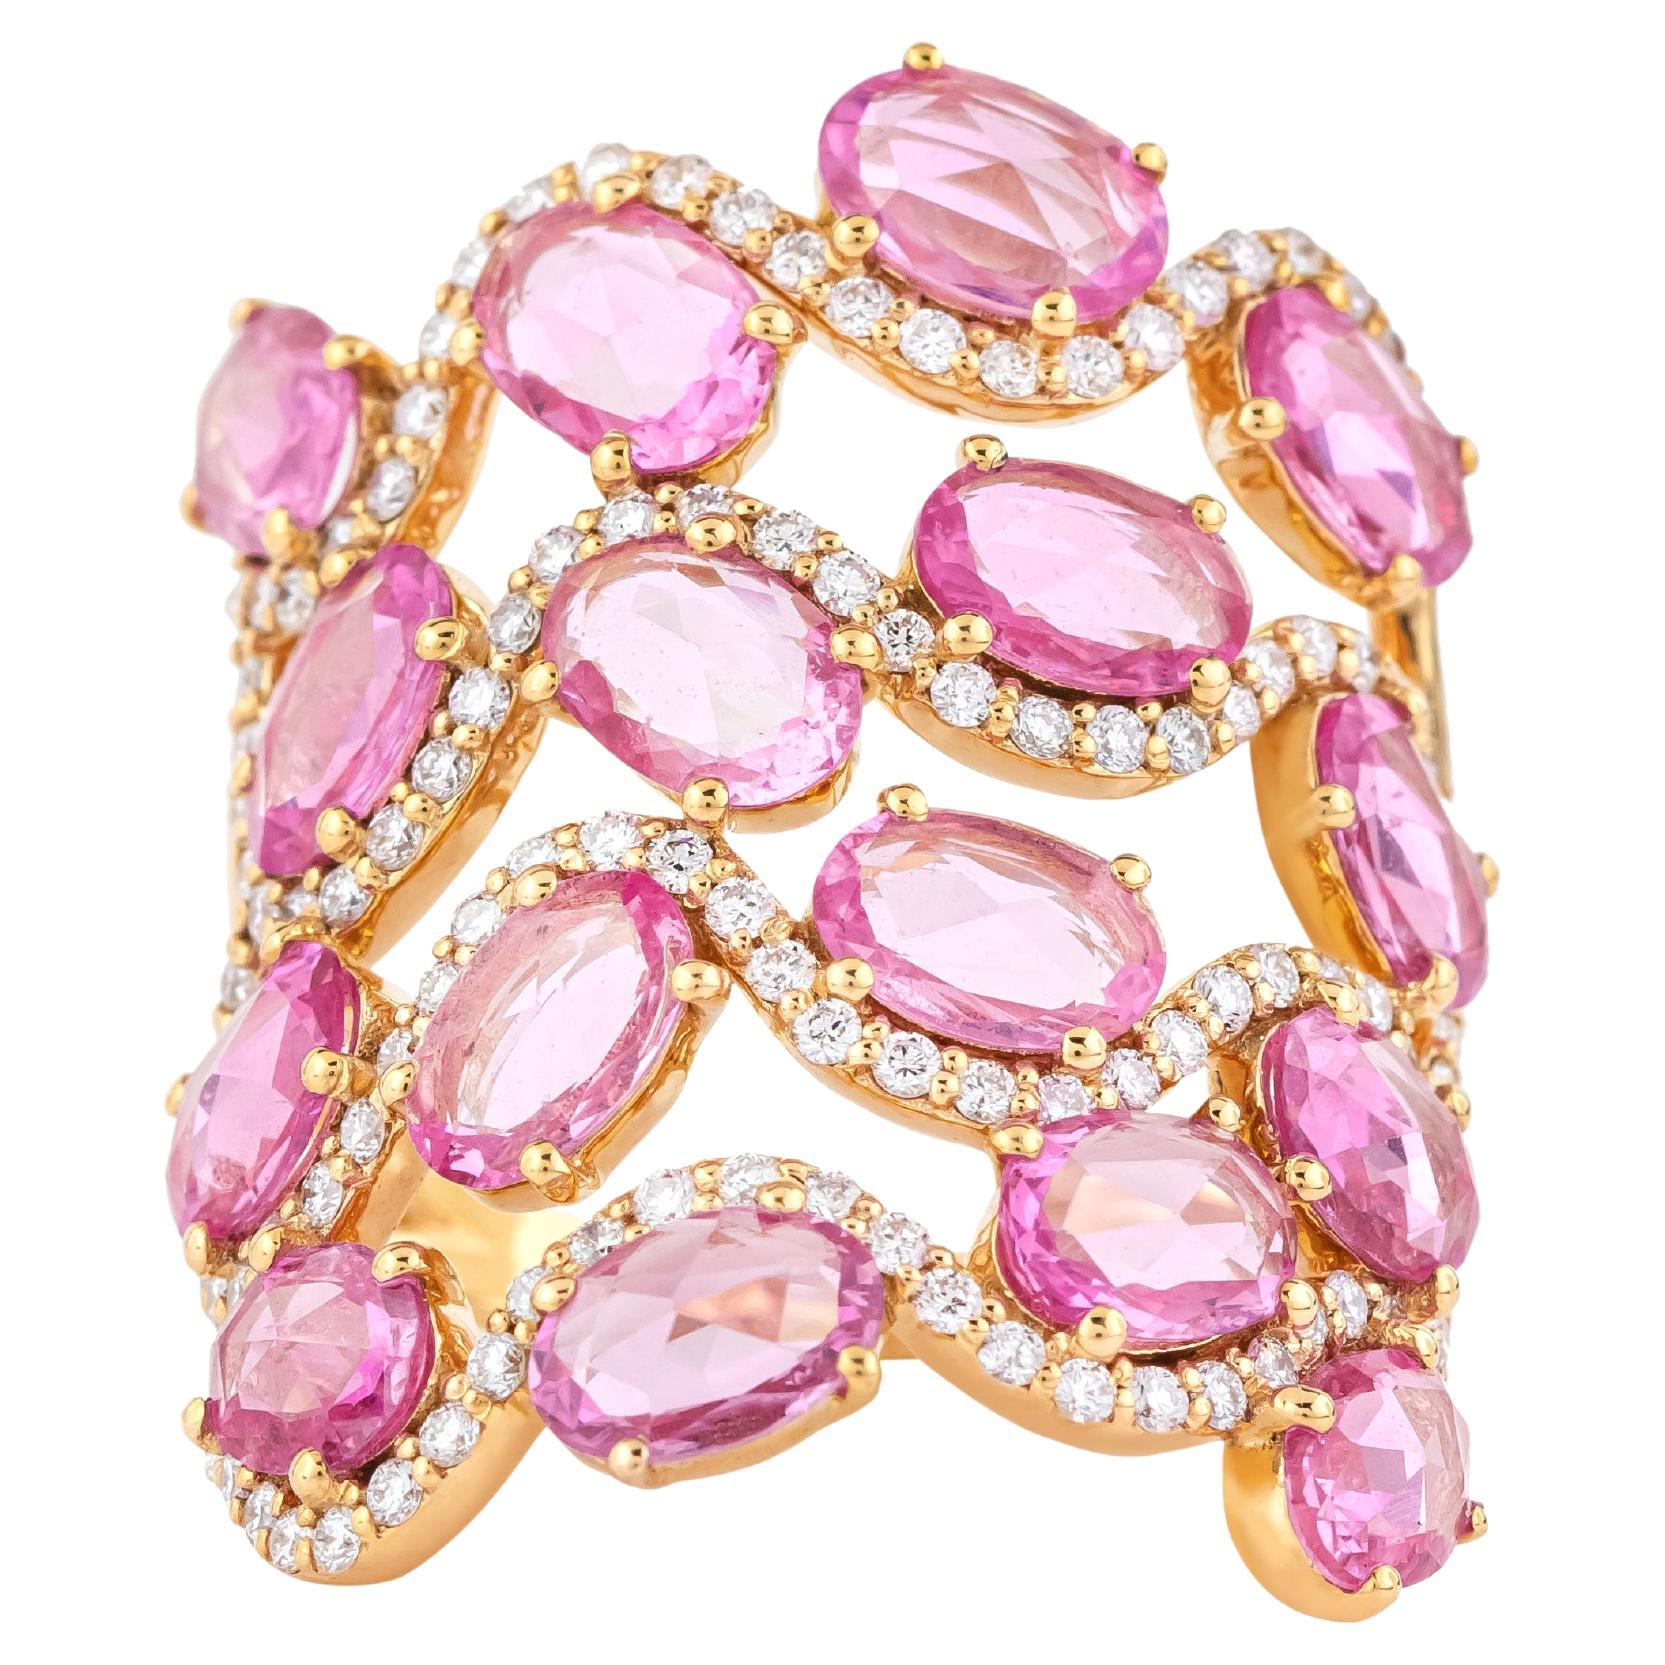 18 Karat Gold 6.1 Carat Diamond and Pink Sapphire Statement Ring